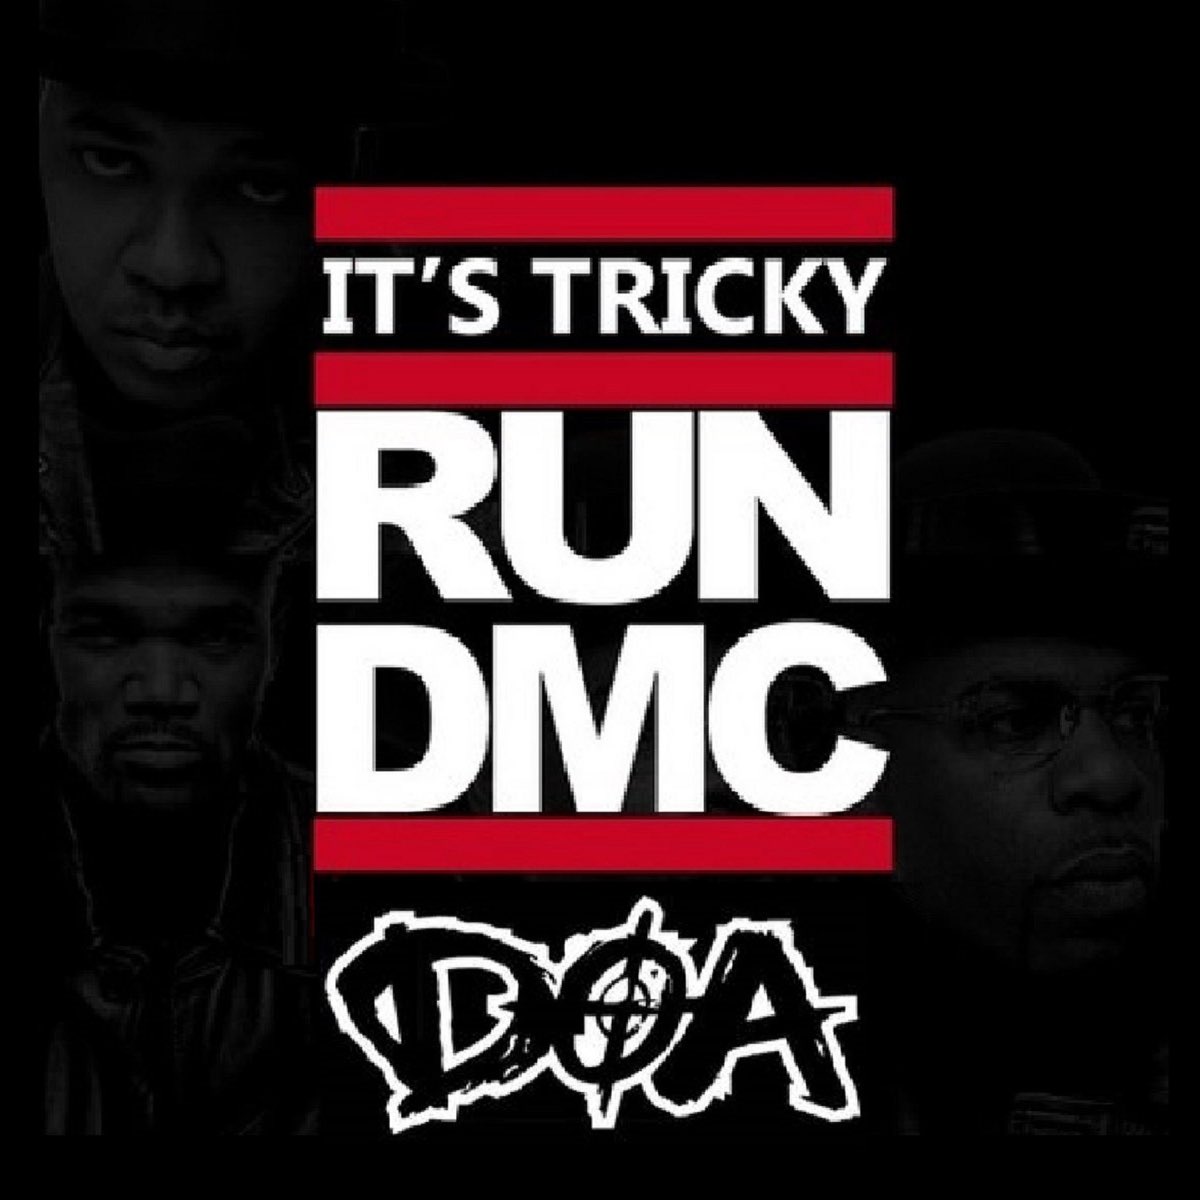 Run dmc tricky